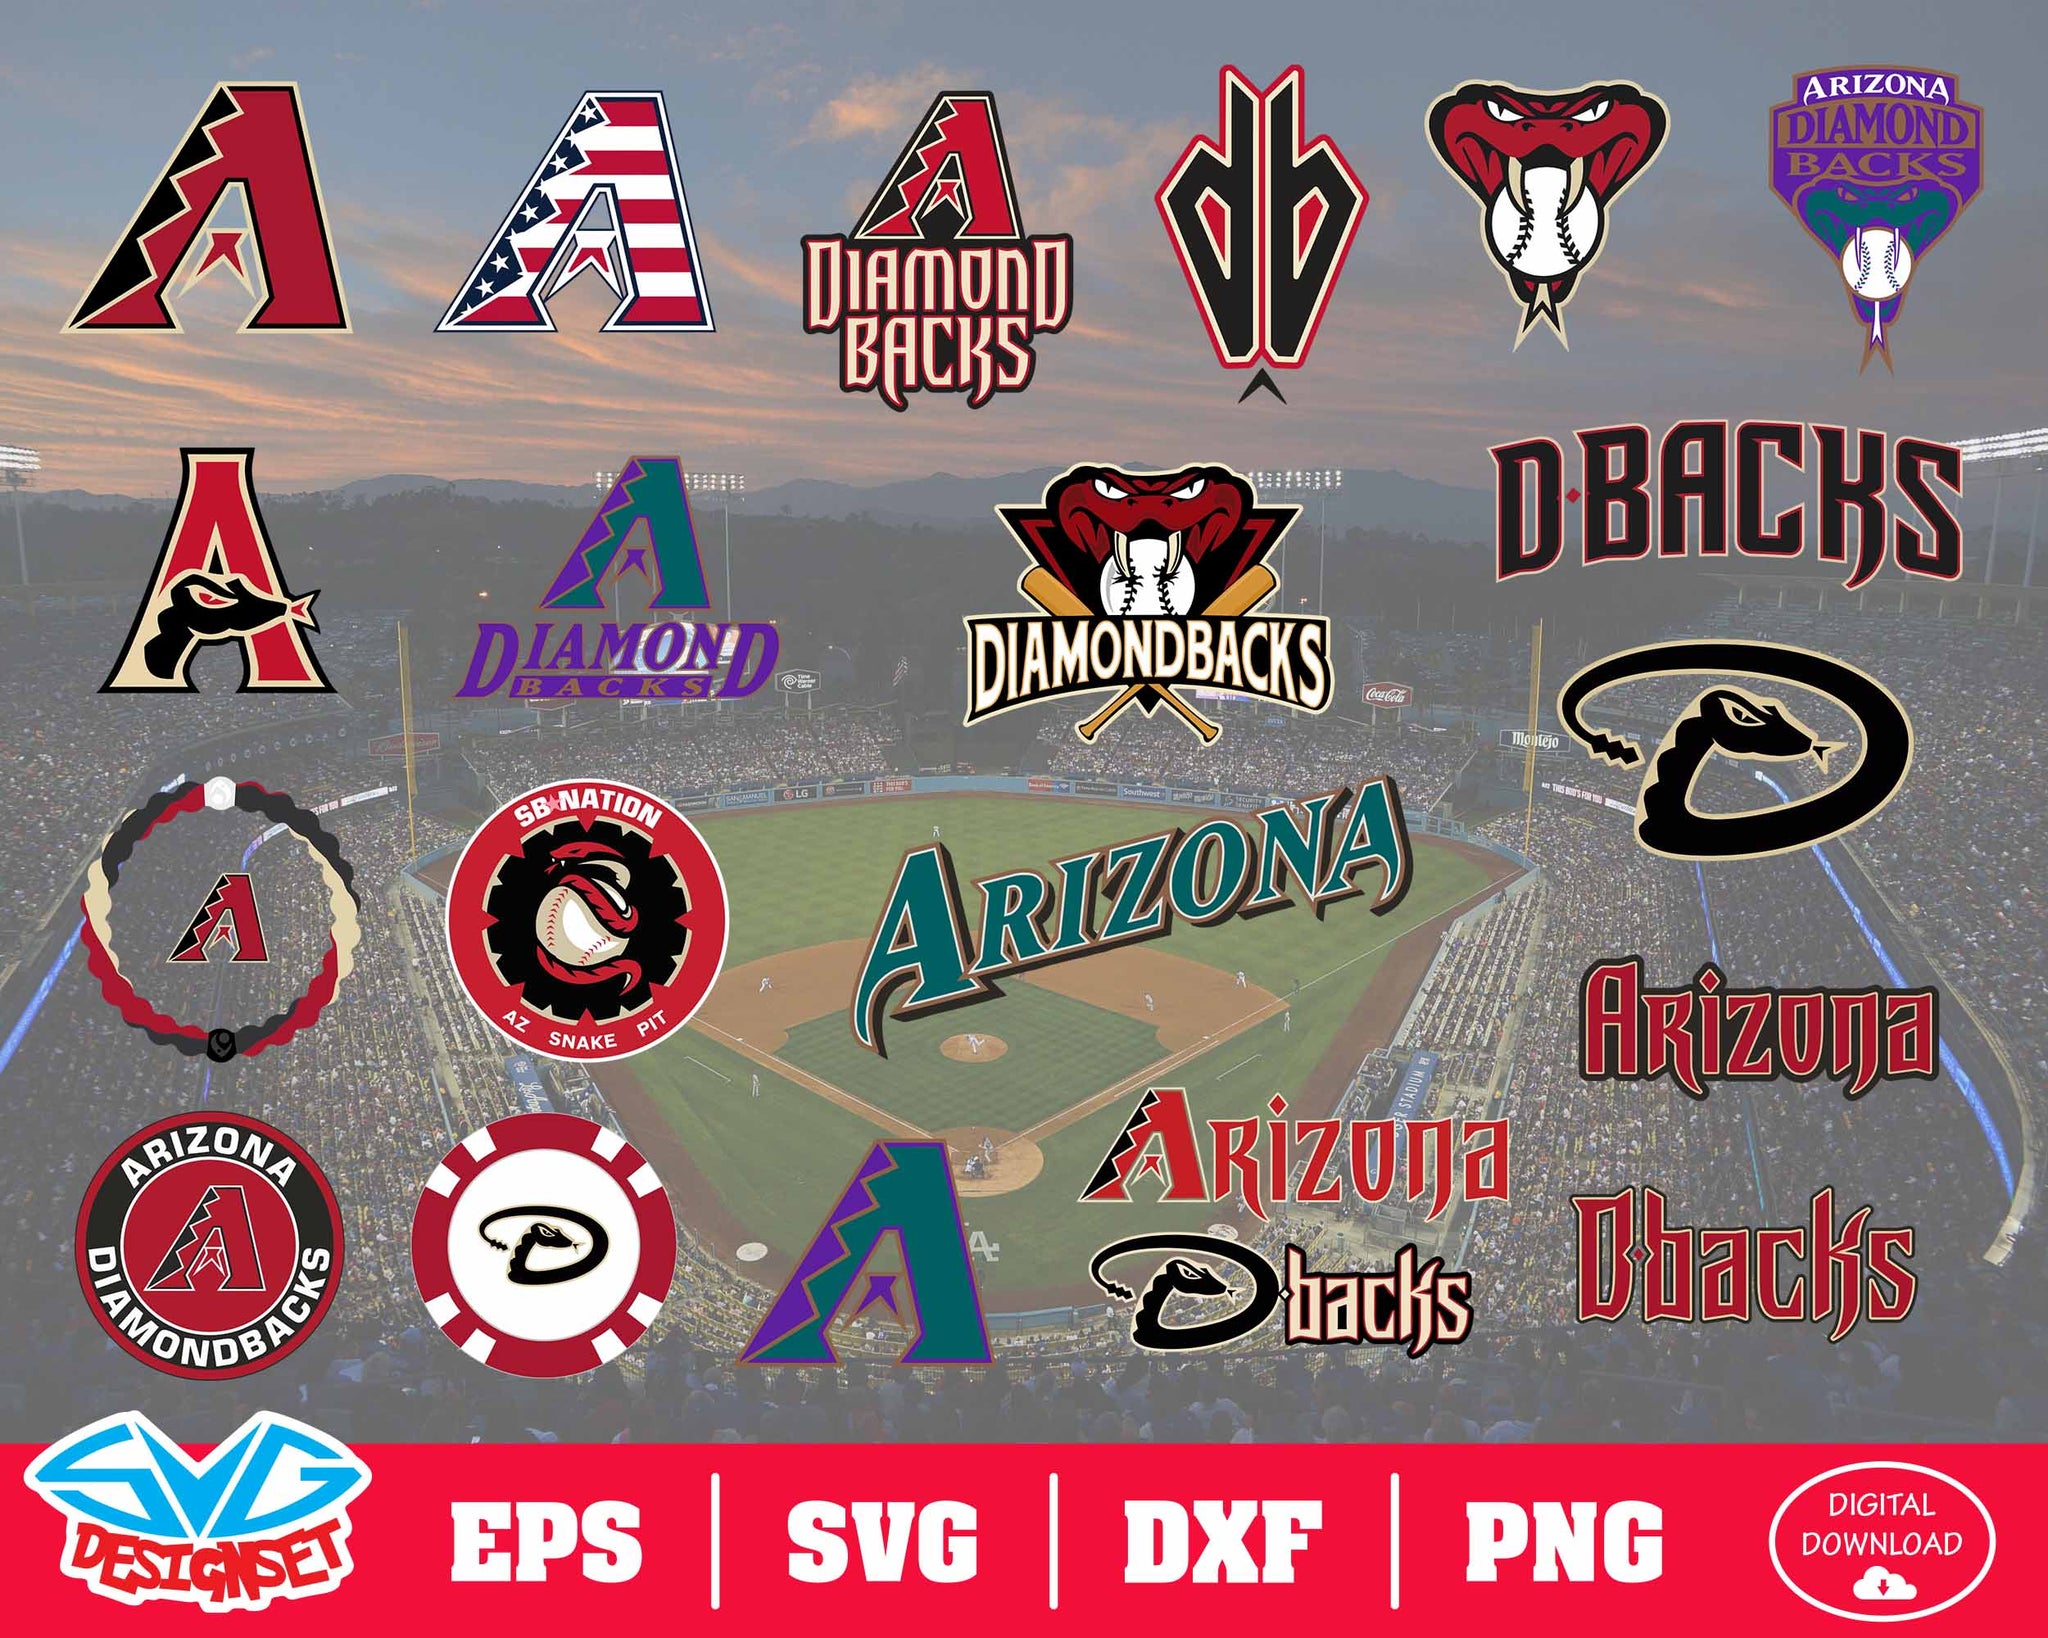 Arizona Diamondbacks MLB Baseball Team Logo Svg, Eps, Dxf, Png  Mlb  baseball teams, Baseball teams logo, Arizona diamondbacks